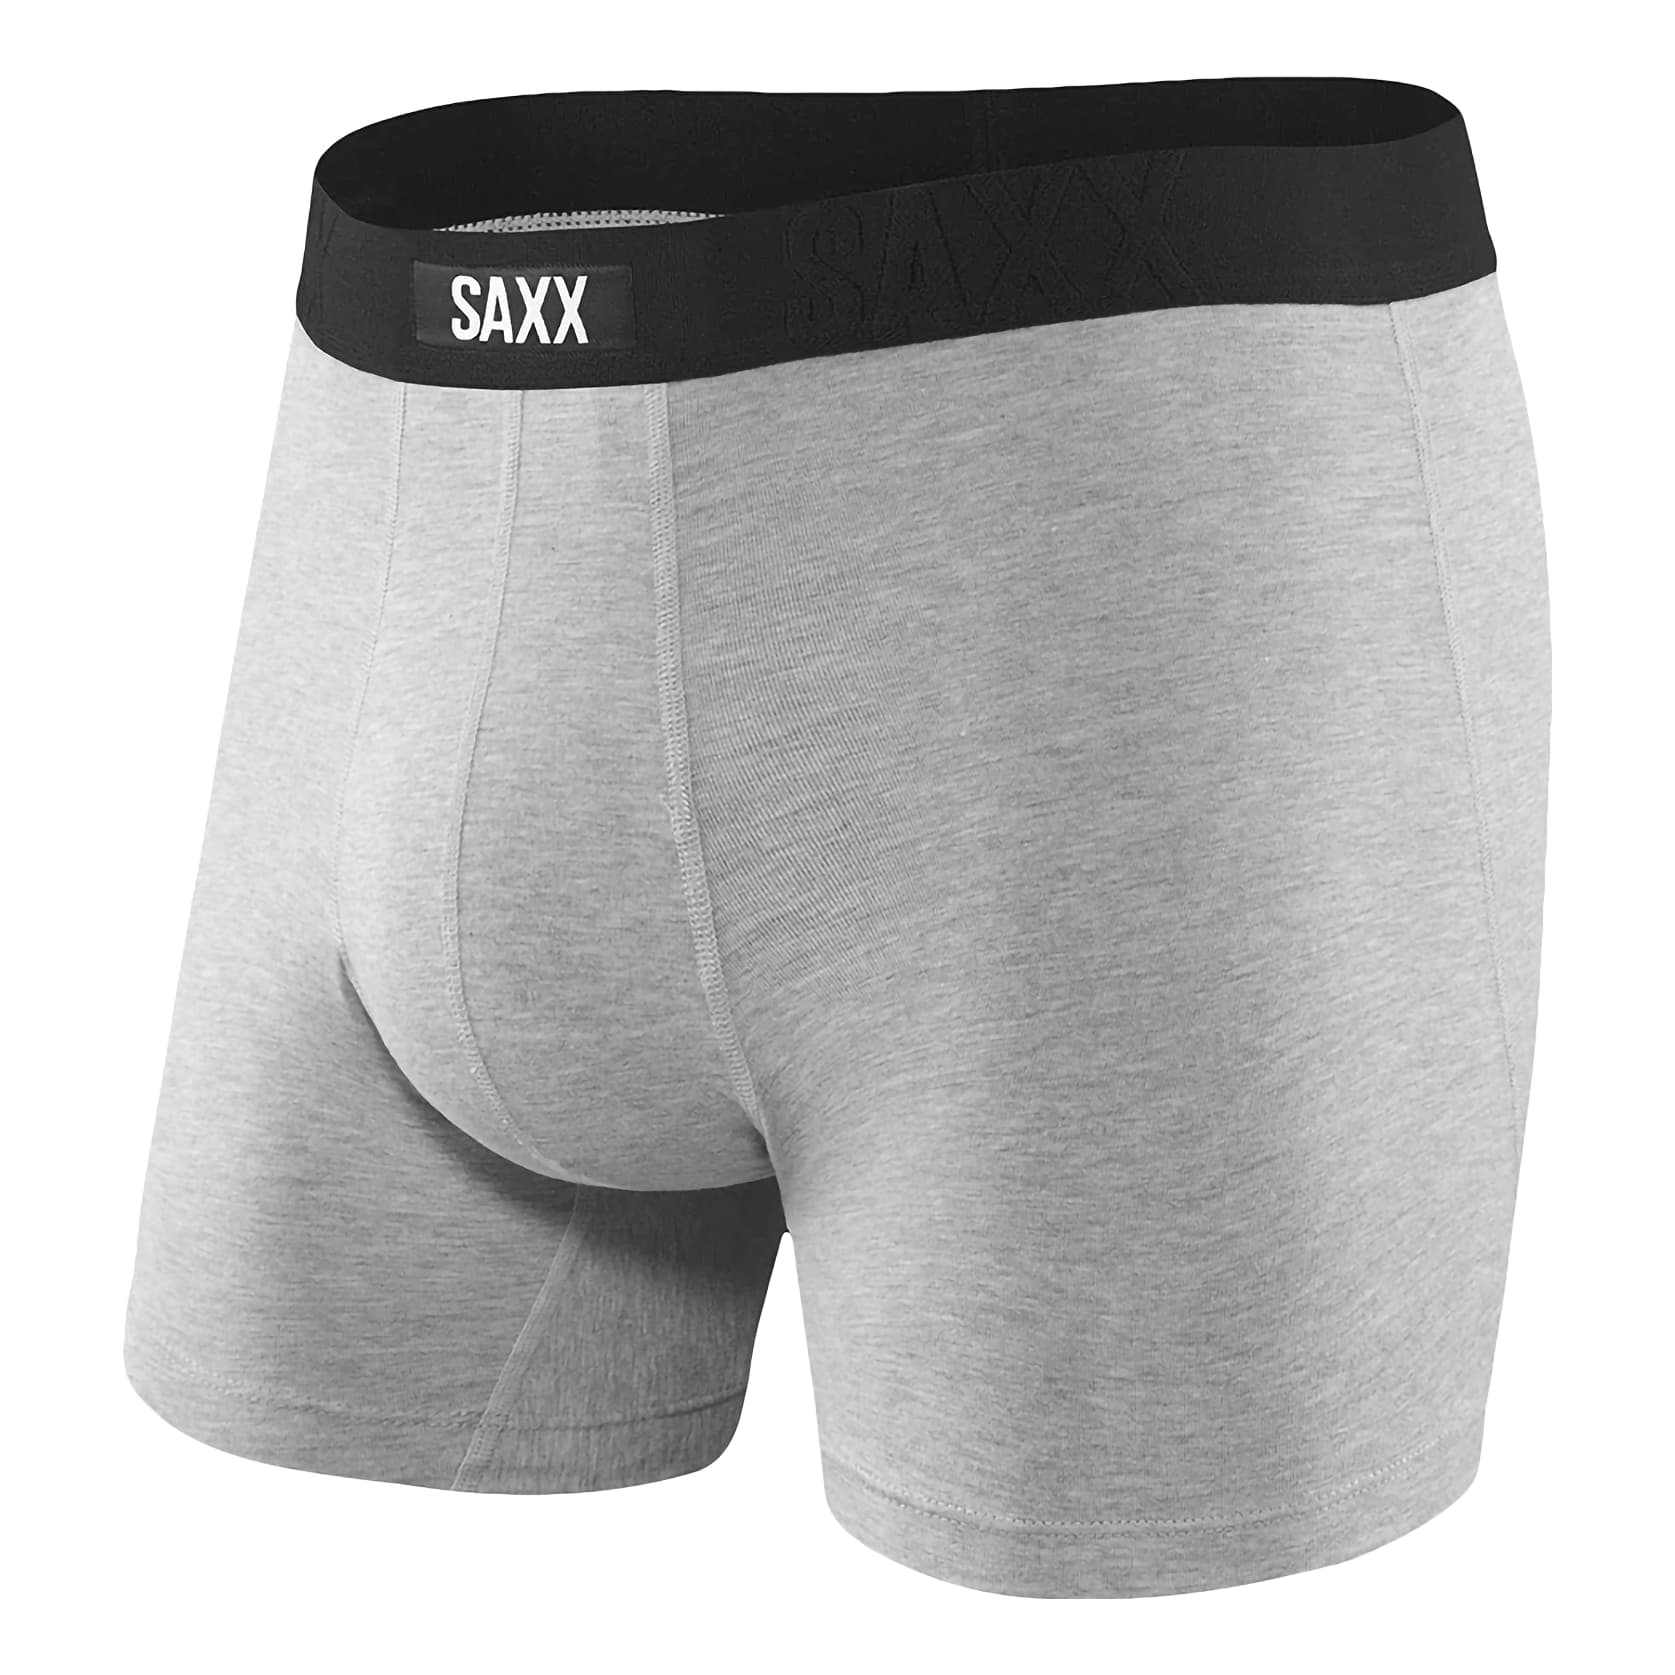 Under Armour Original Boxerjock Underwear 2 Pack 6” Boxer Brief Men’s Small